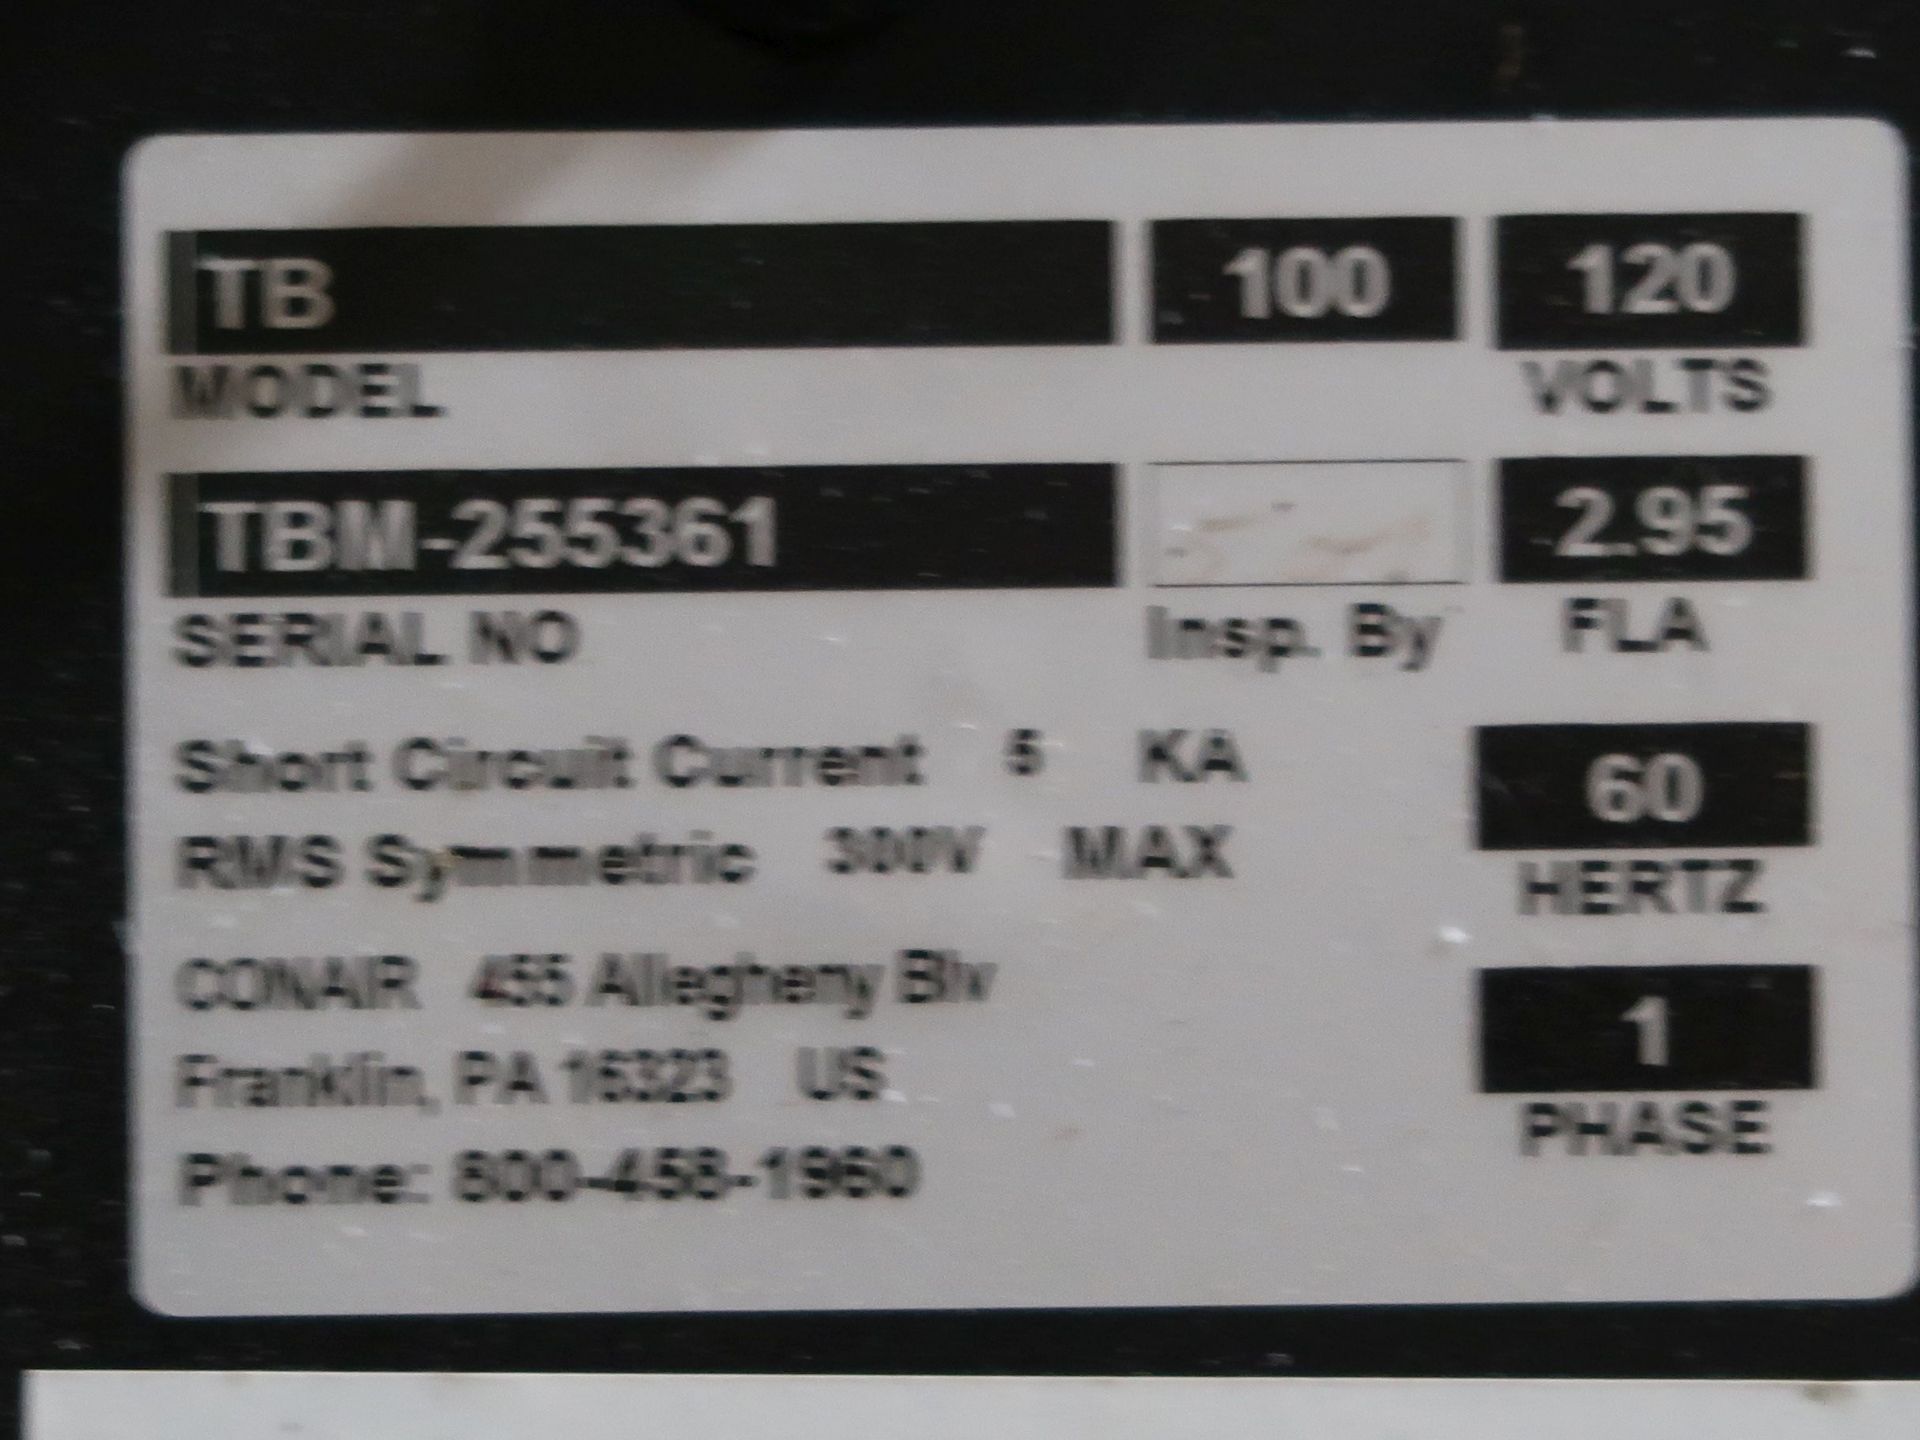 CONAIR MODEL TB 4-COMPONENT BLENDER; S/N TBM-255361 (2012) - Image 4 of 4